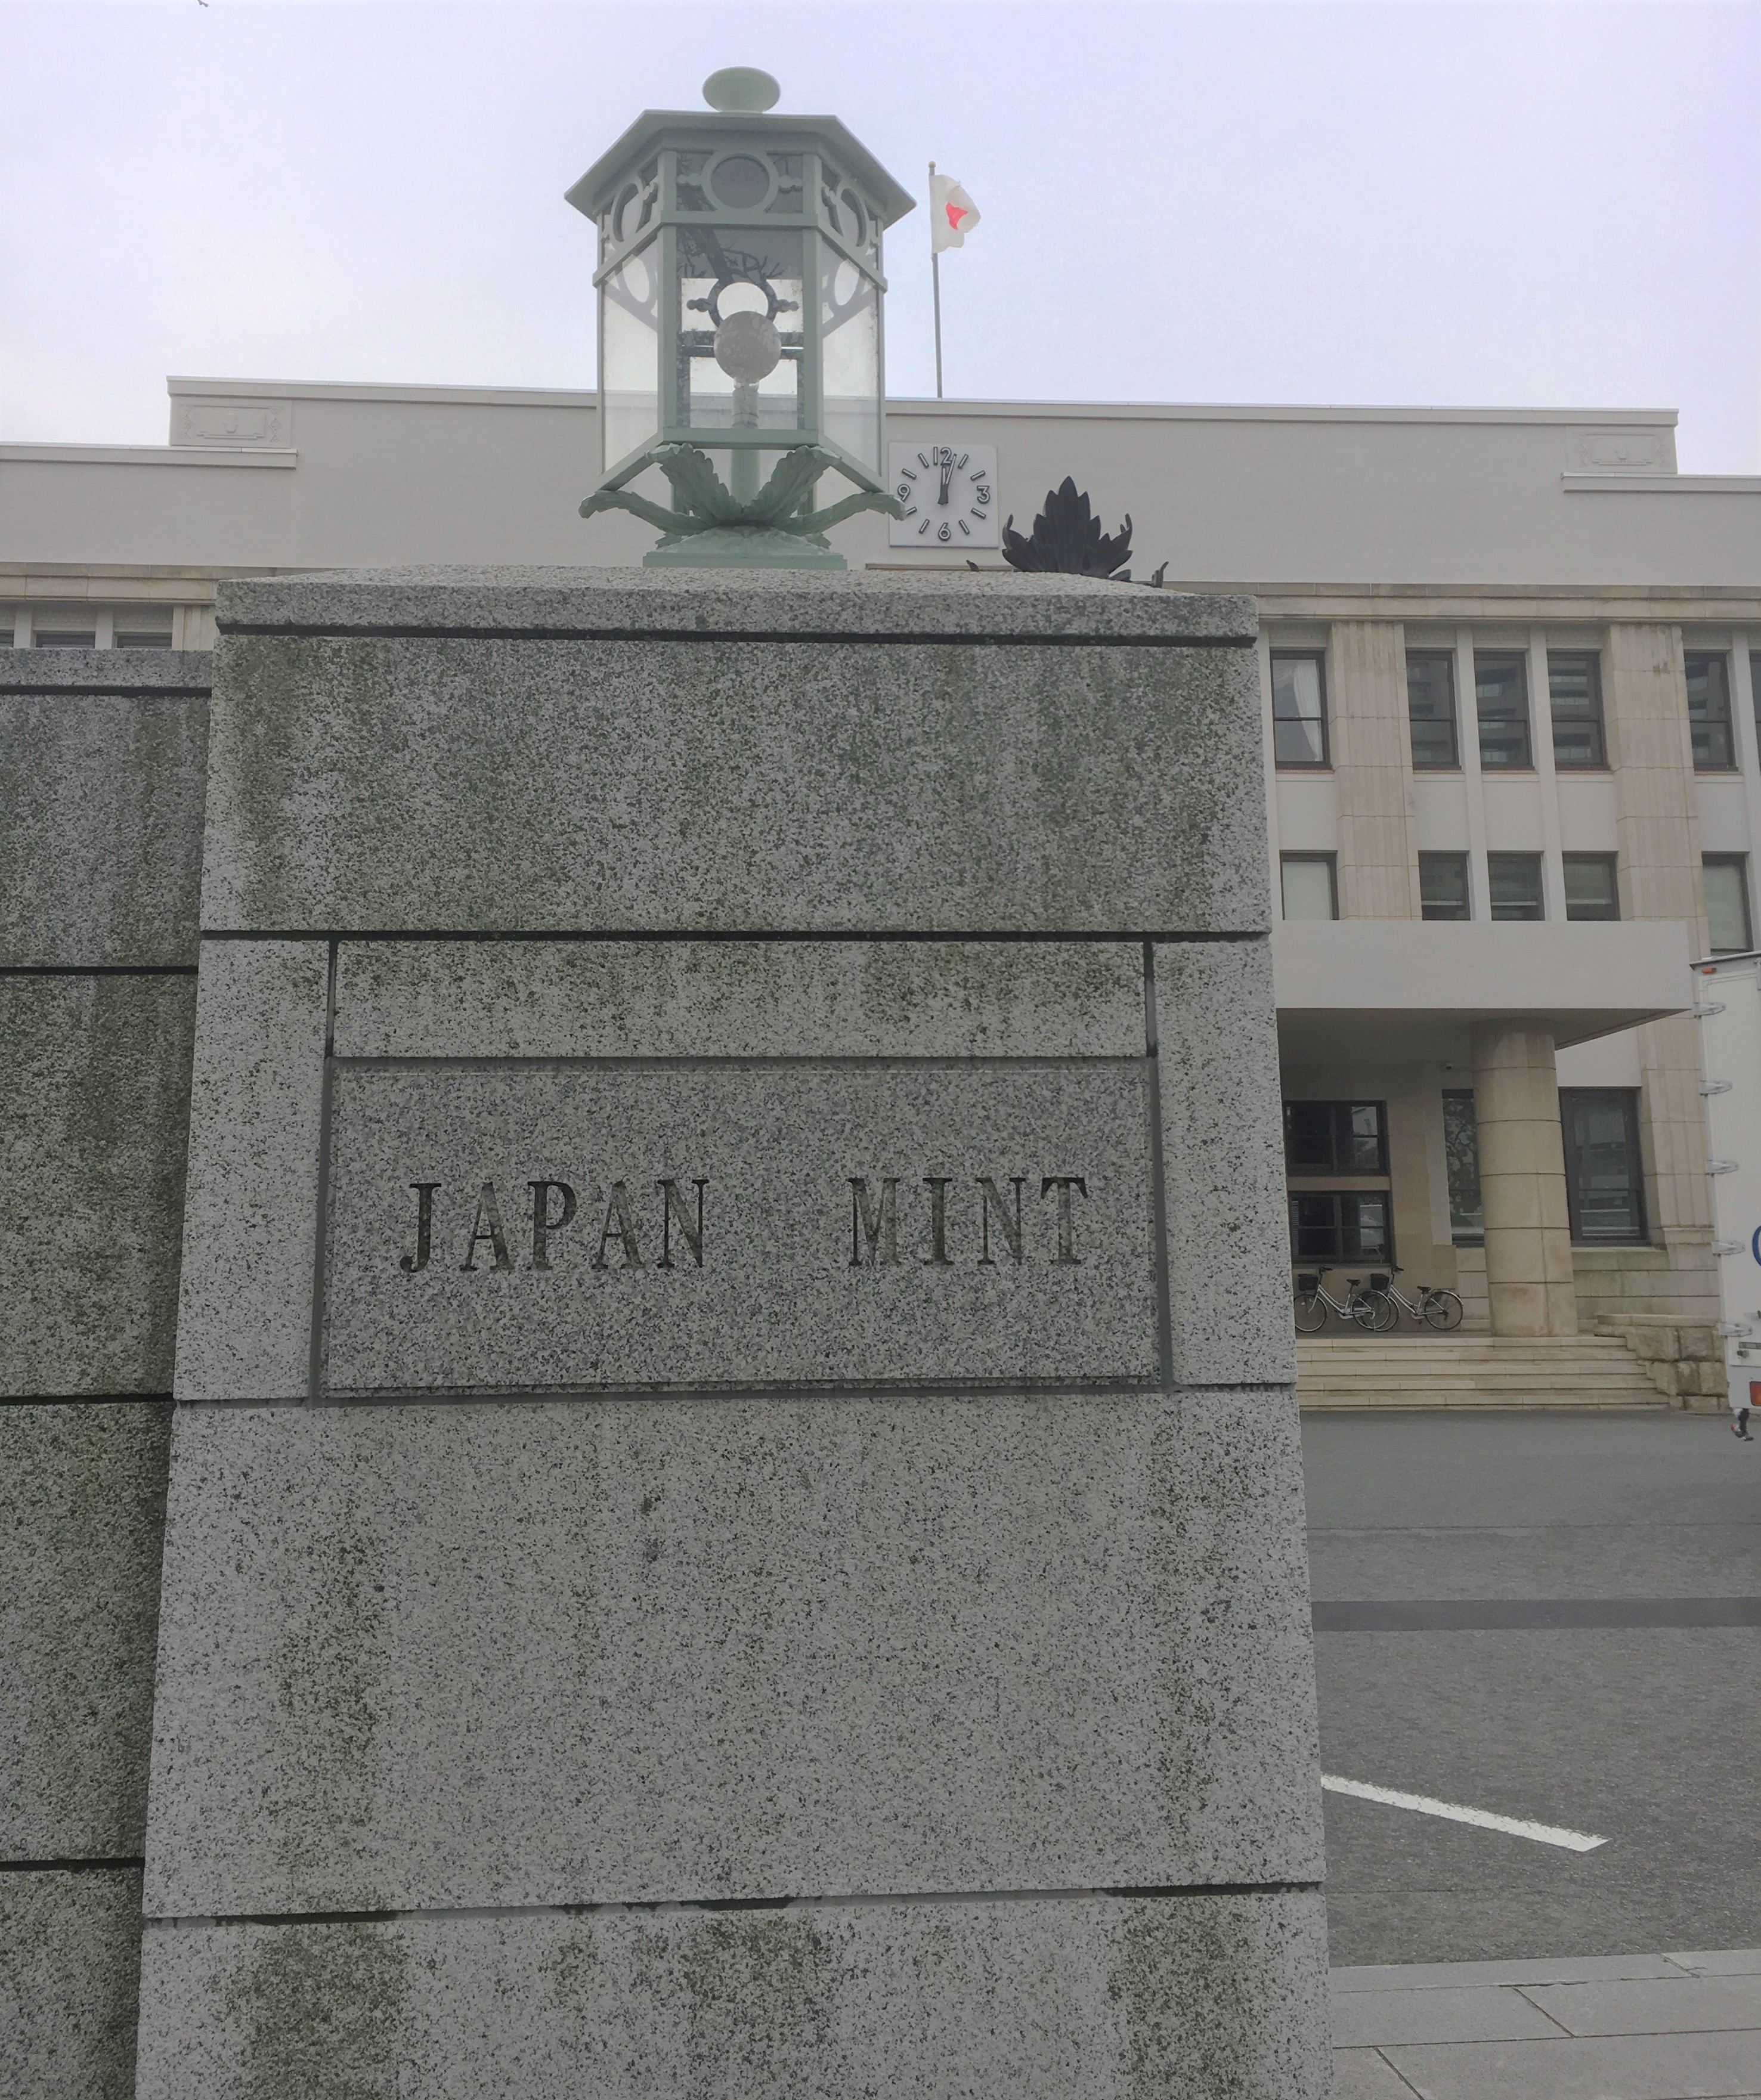 stone gates of the Japan Mint that read Japan Mint